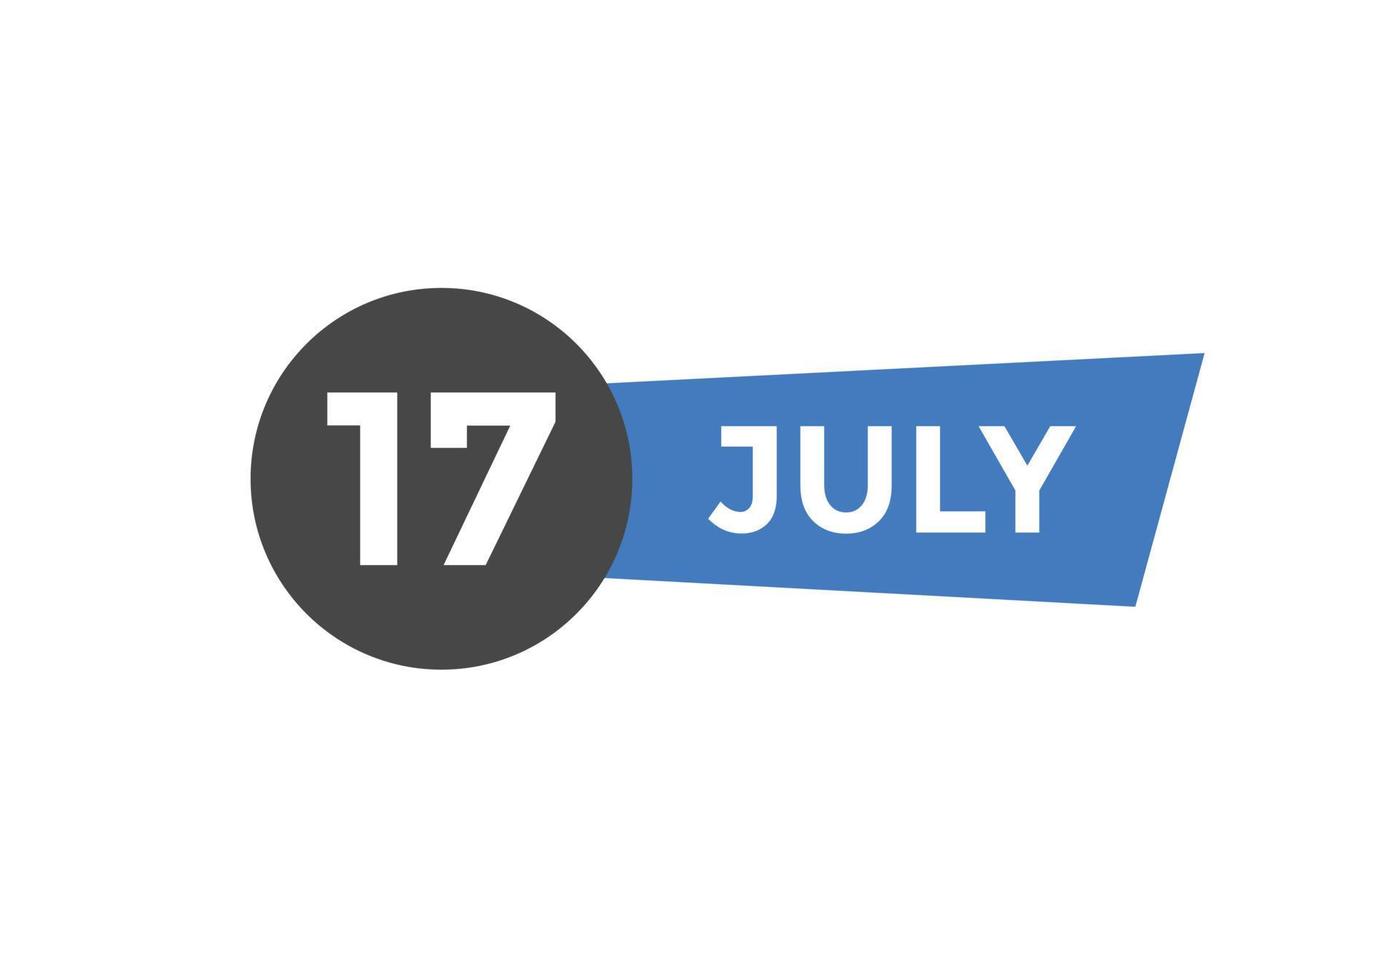 juli 17 kalender påminnelse. 17:e juli dagligen kalender ikon mall. kalender 17:e juli ikon design mall. vektor illustration